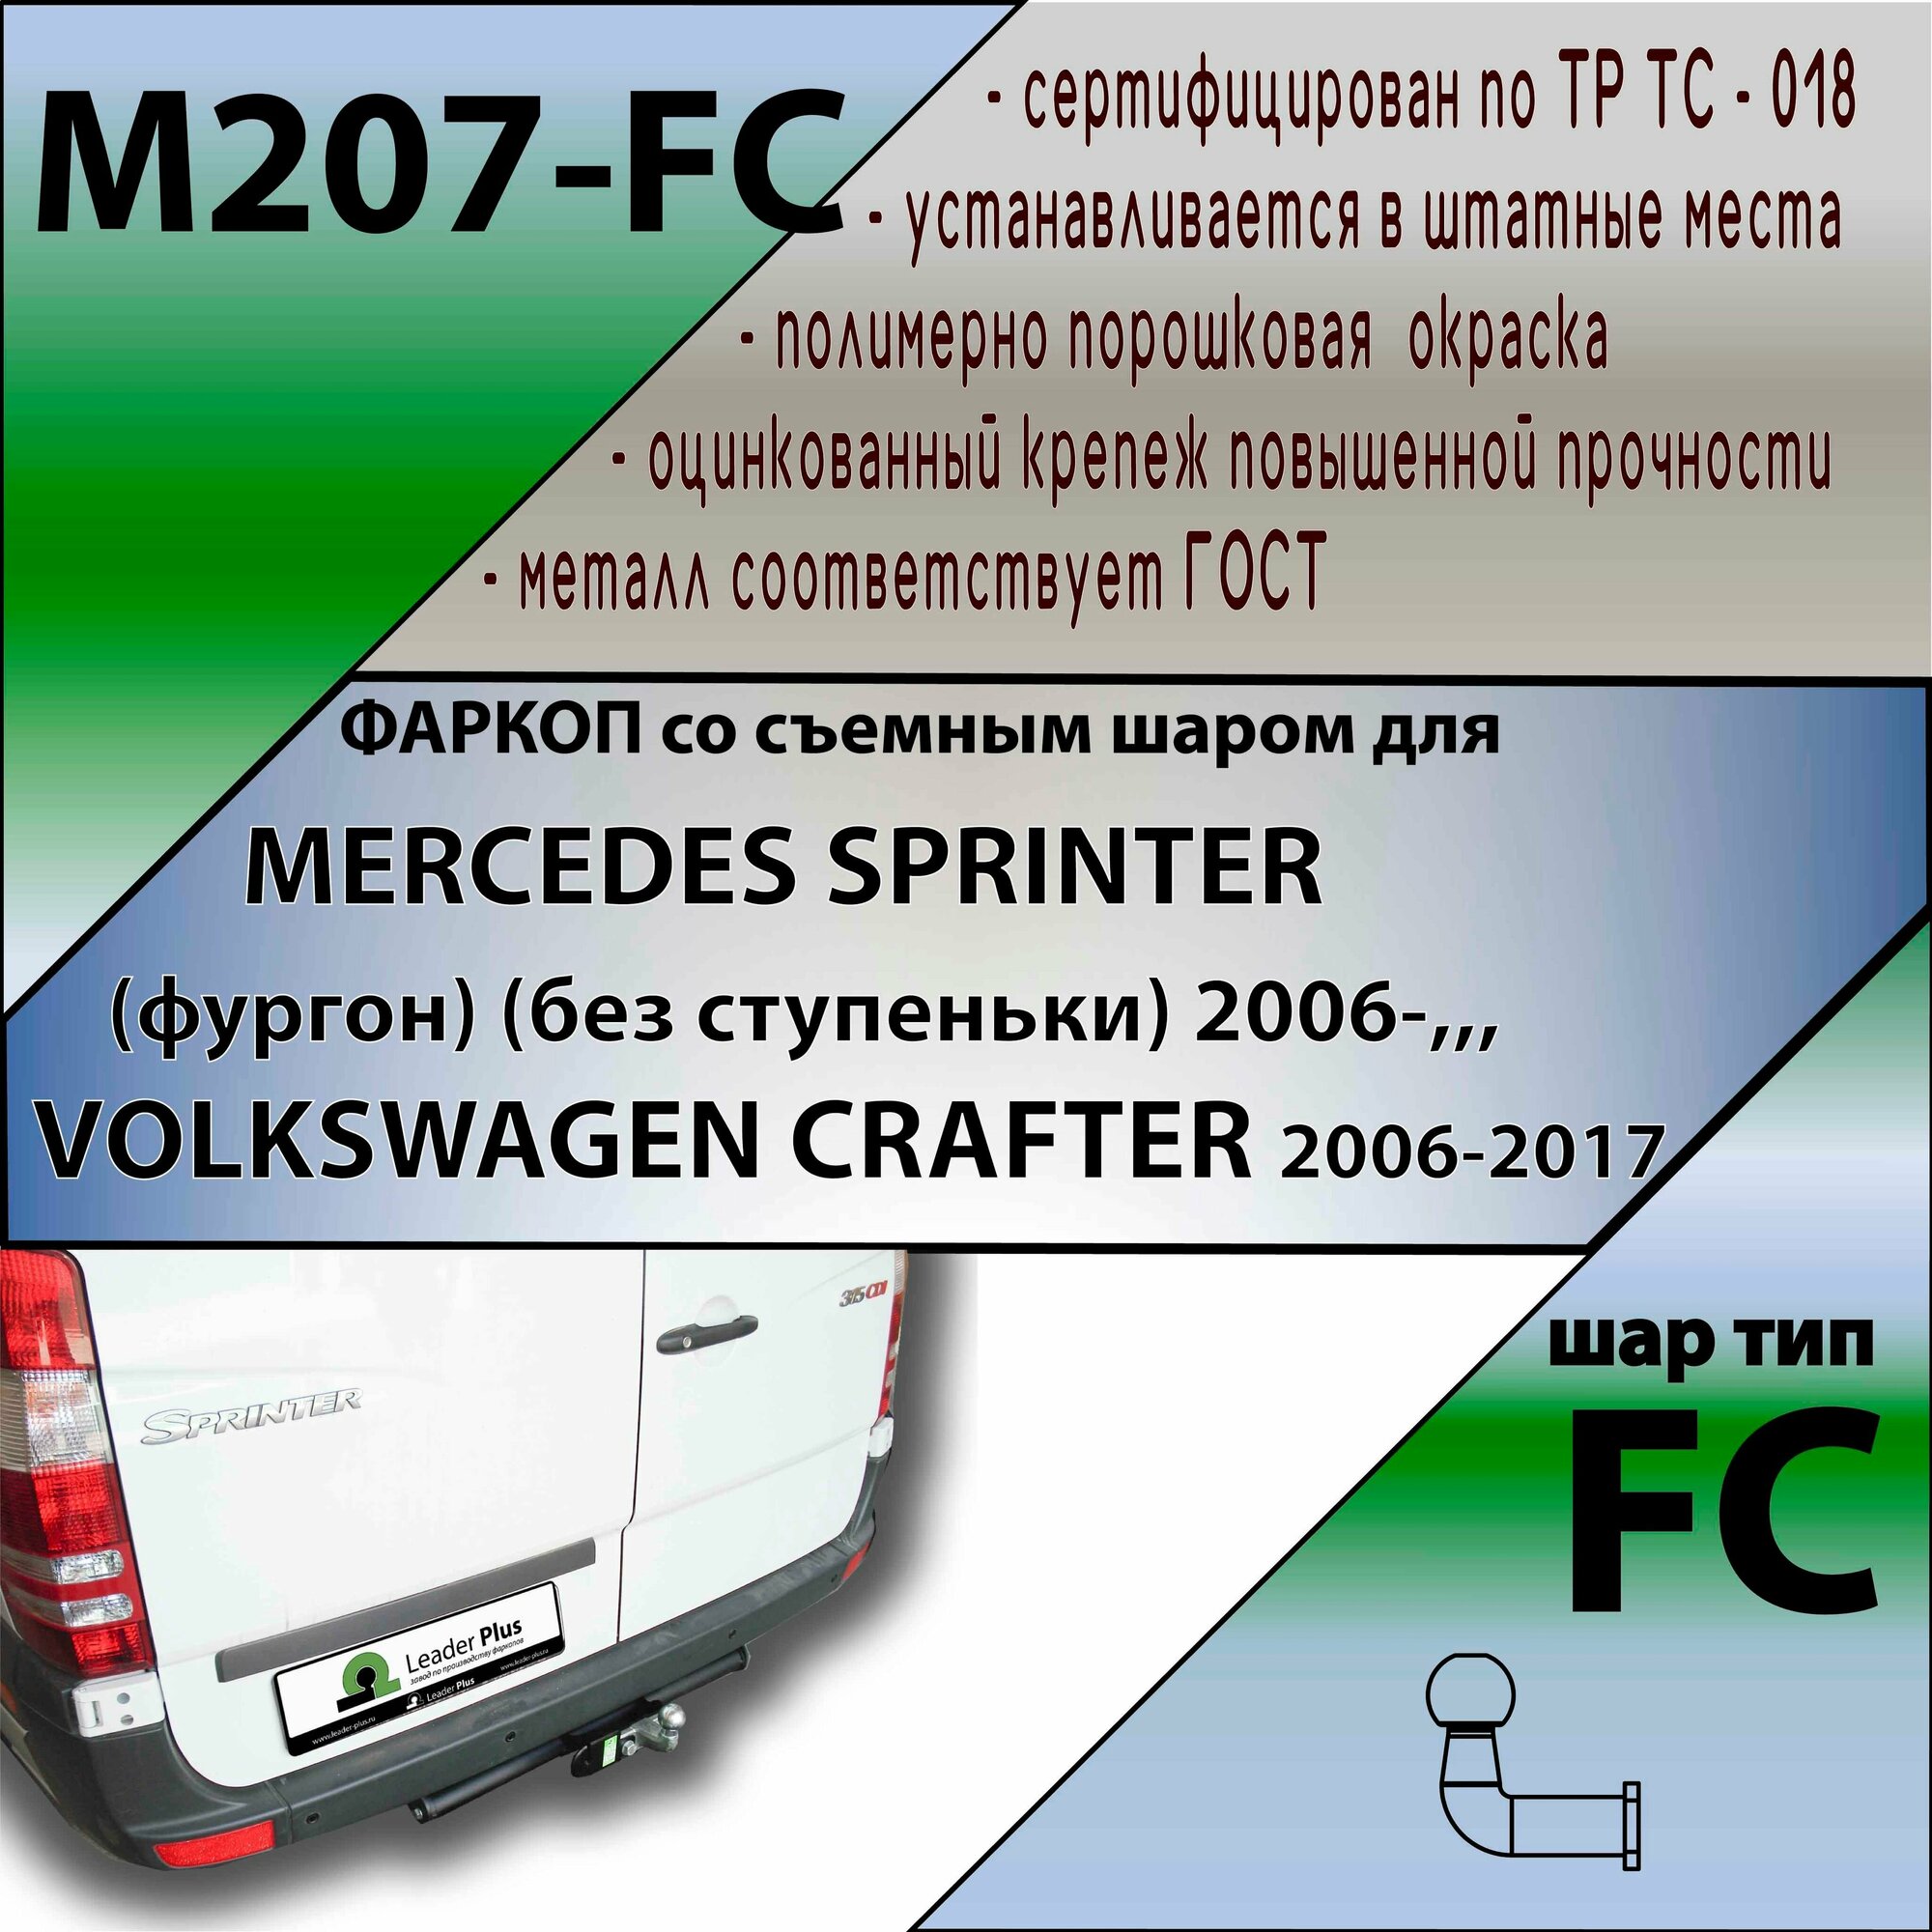 Фаркоп Лидер плюс M207-FC для MERCEDES SPRINTER (фургон) (без ступеньки) 2006- / VOLKSWAGEN CRAFTER 2006-2017